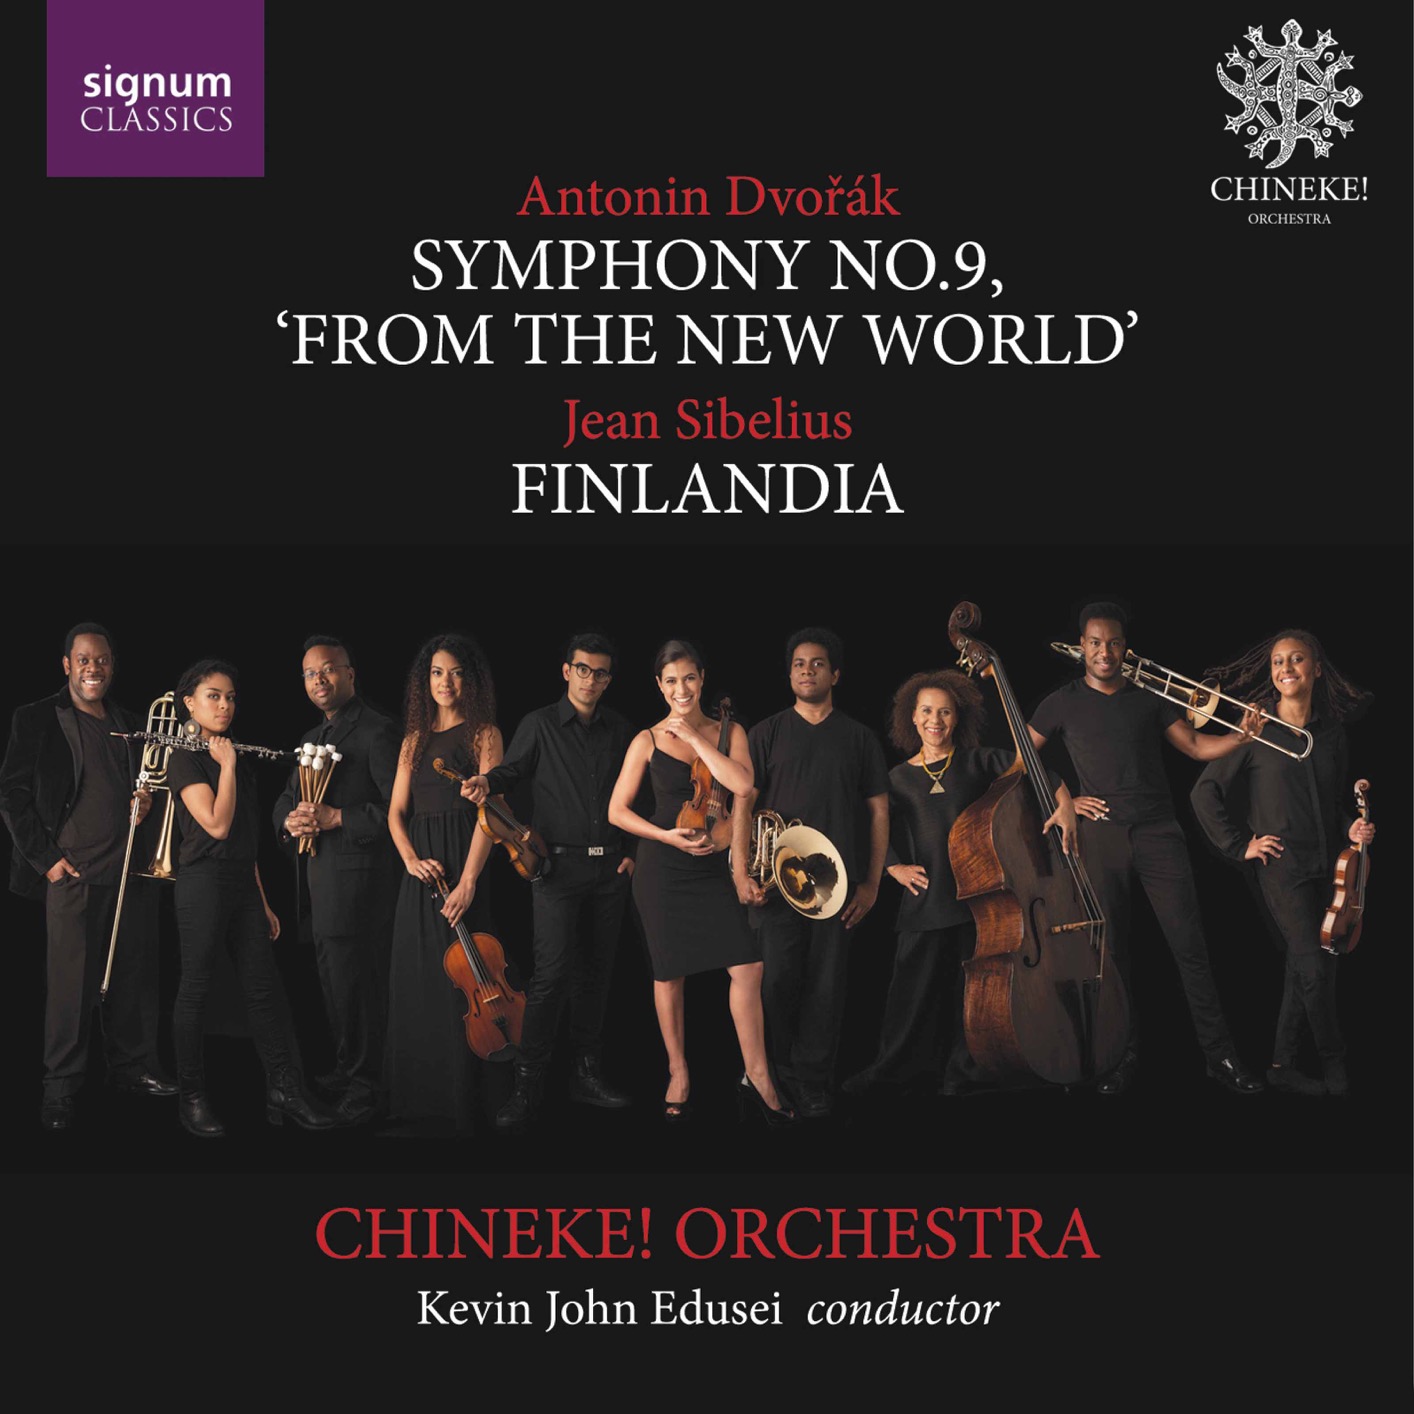 Chineke! Orchestra & Keven John Edusei - Dvorak: Symphony No. 9 "From the New World" ; Sibelius: Finlandia (2017) [Qobuz FLAC 24bit/96kHz]